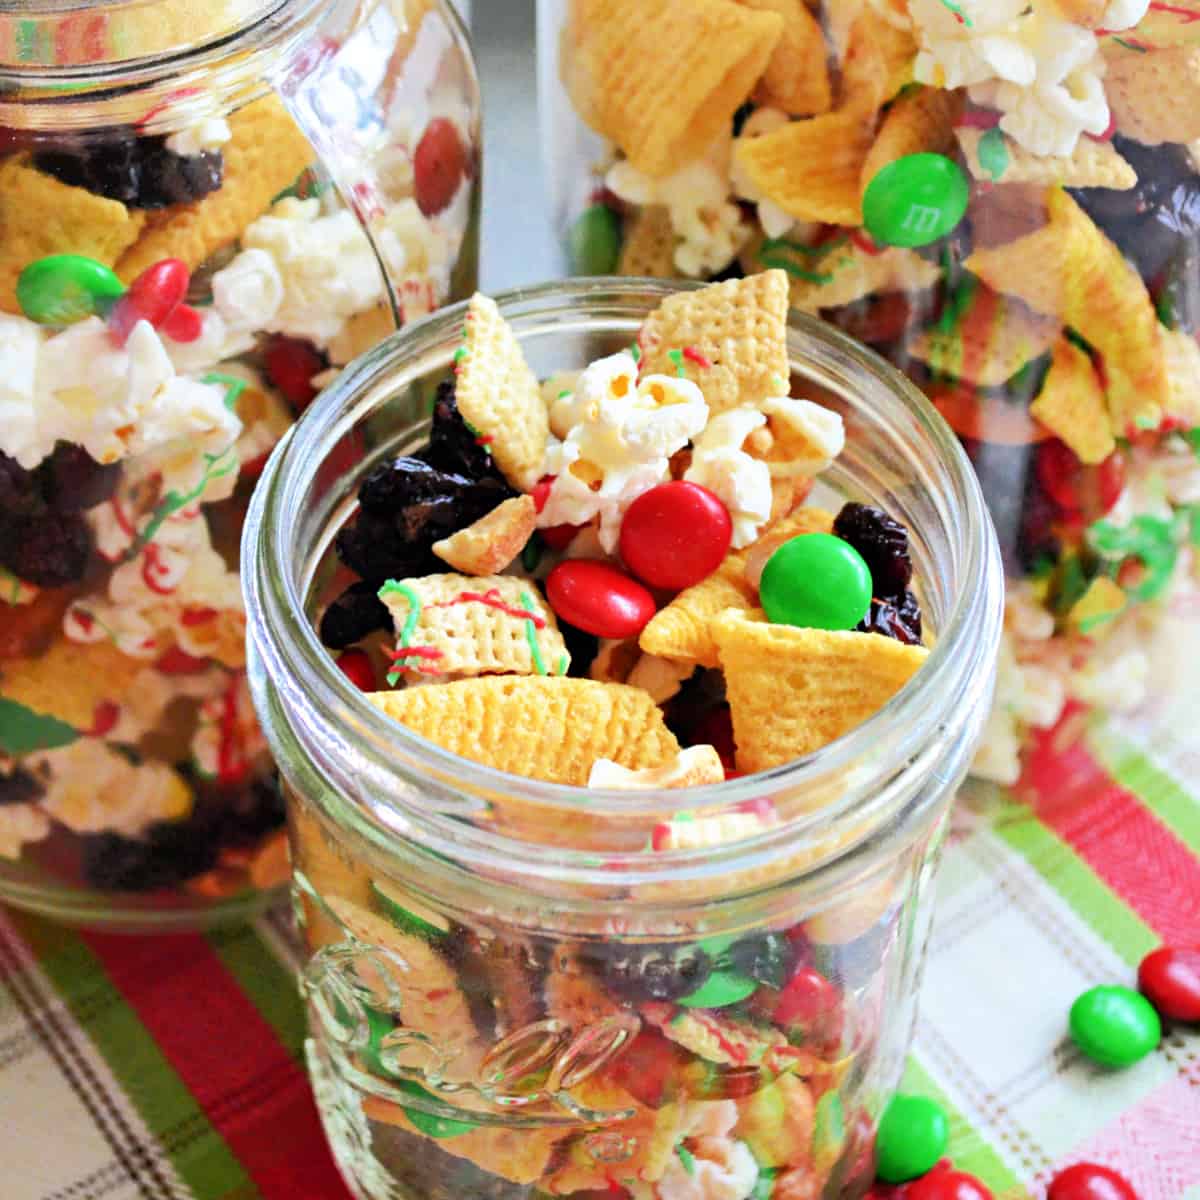 M&M's Popcorn Snack Mix - Daily Appetite